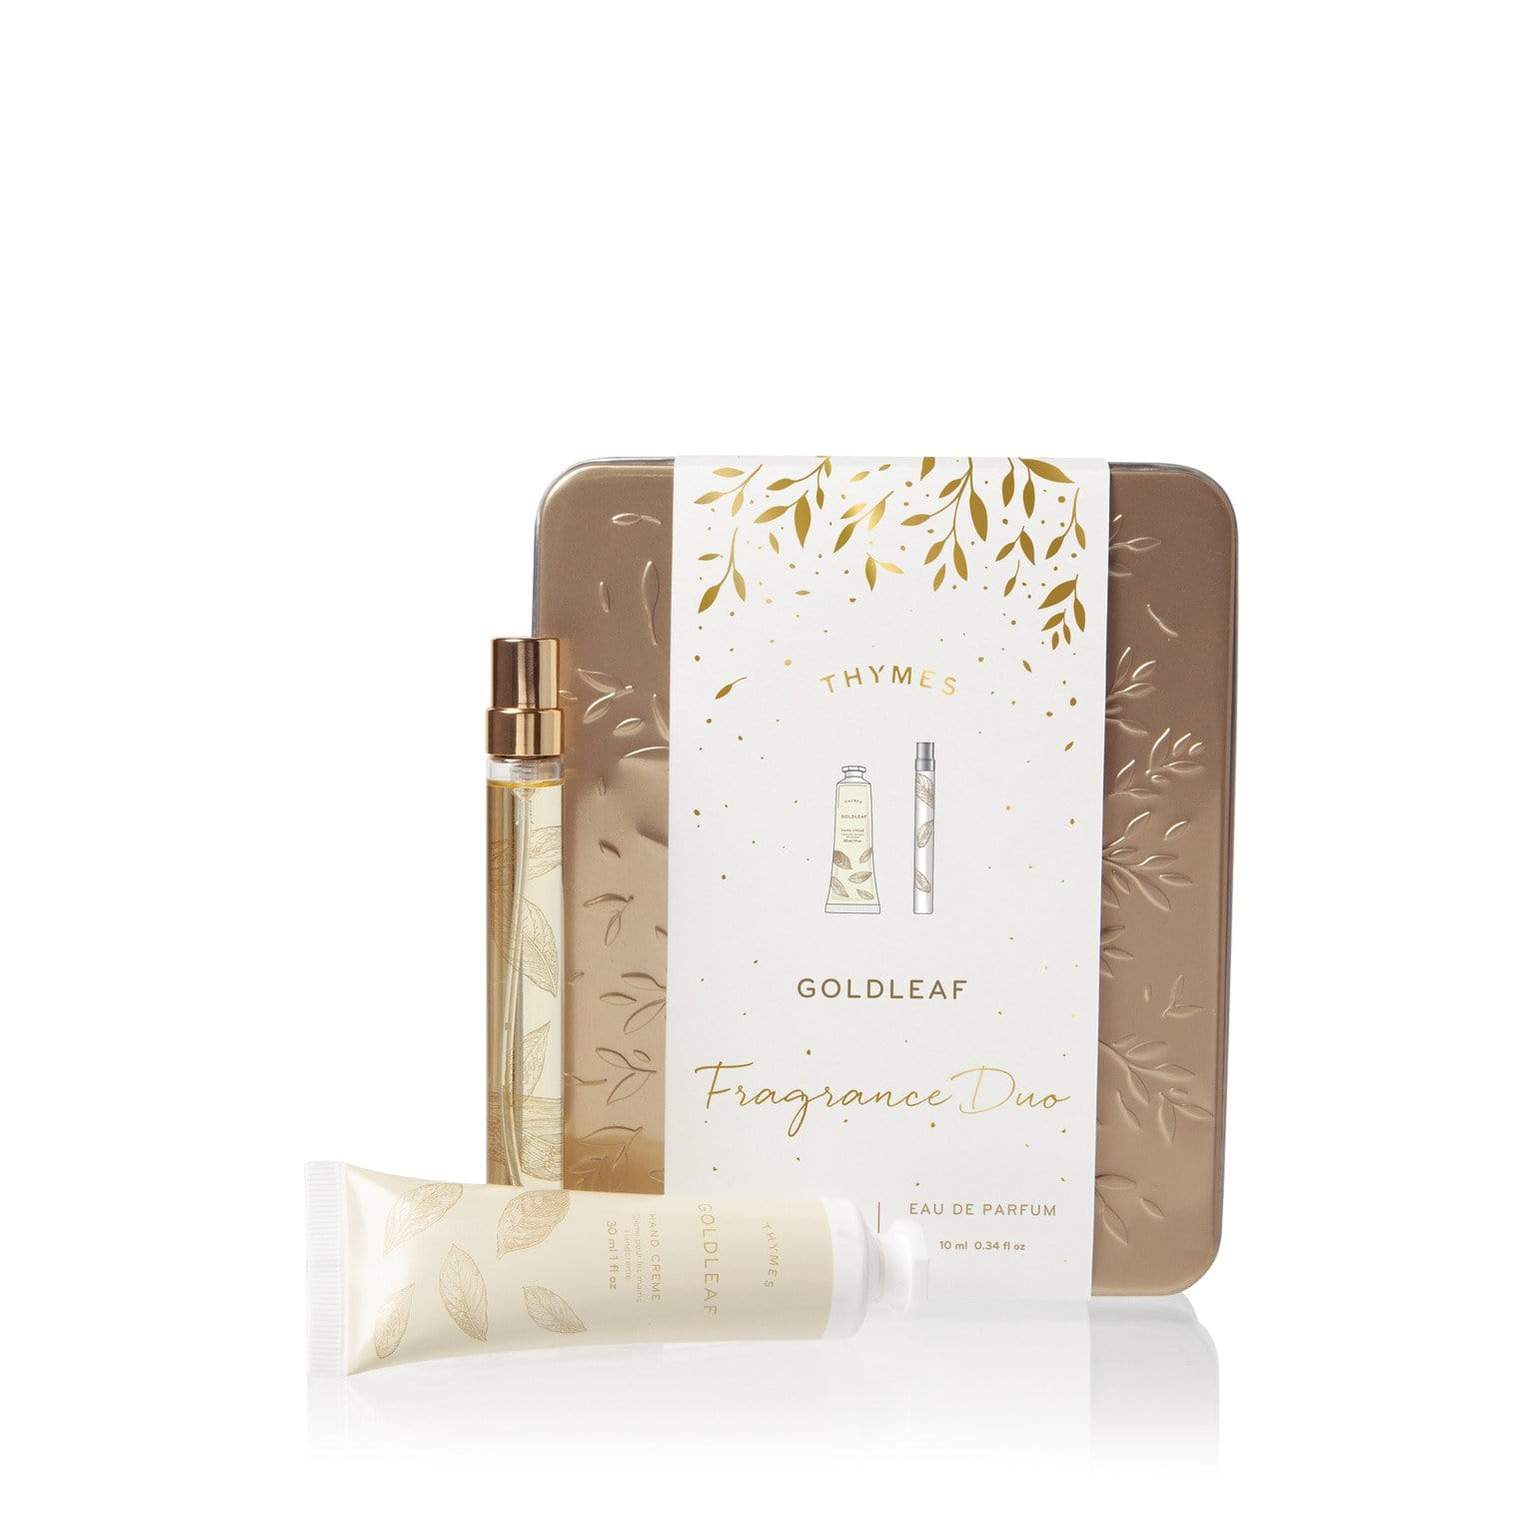 Thymes Goldleaf Fragrance Duo Gift Set